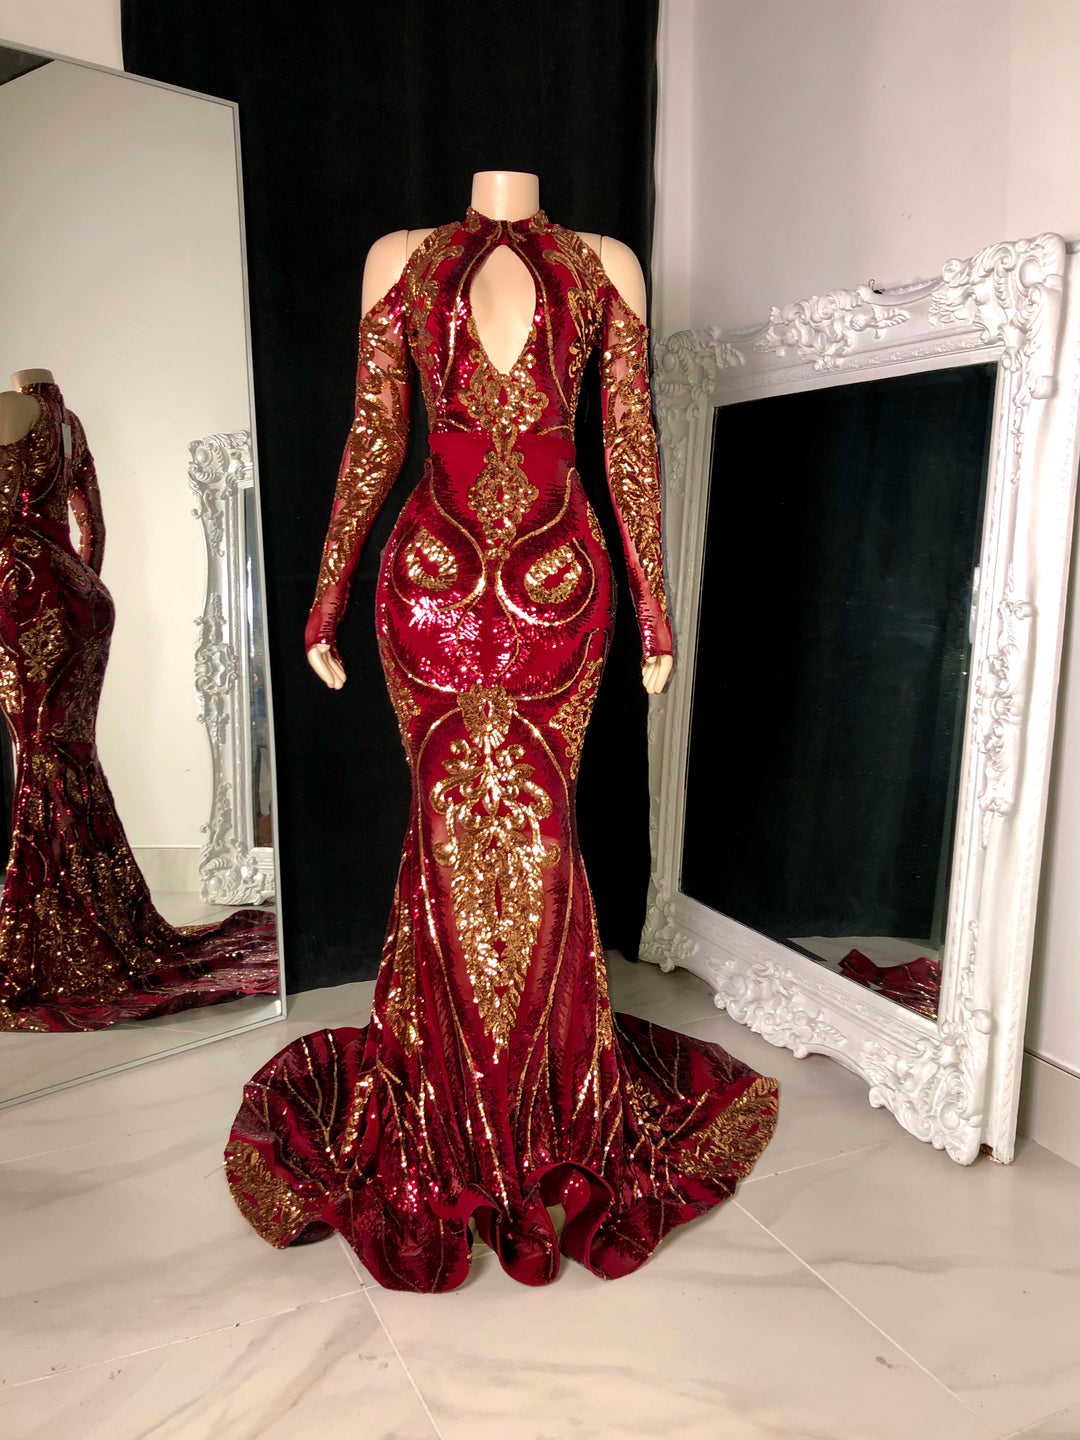 The MYA Sequin Gown